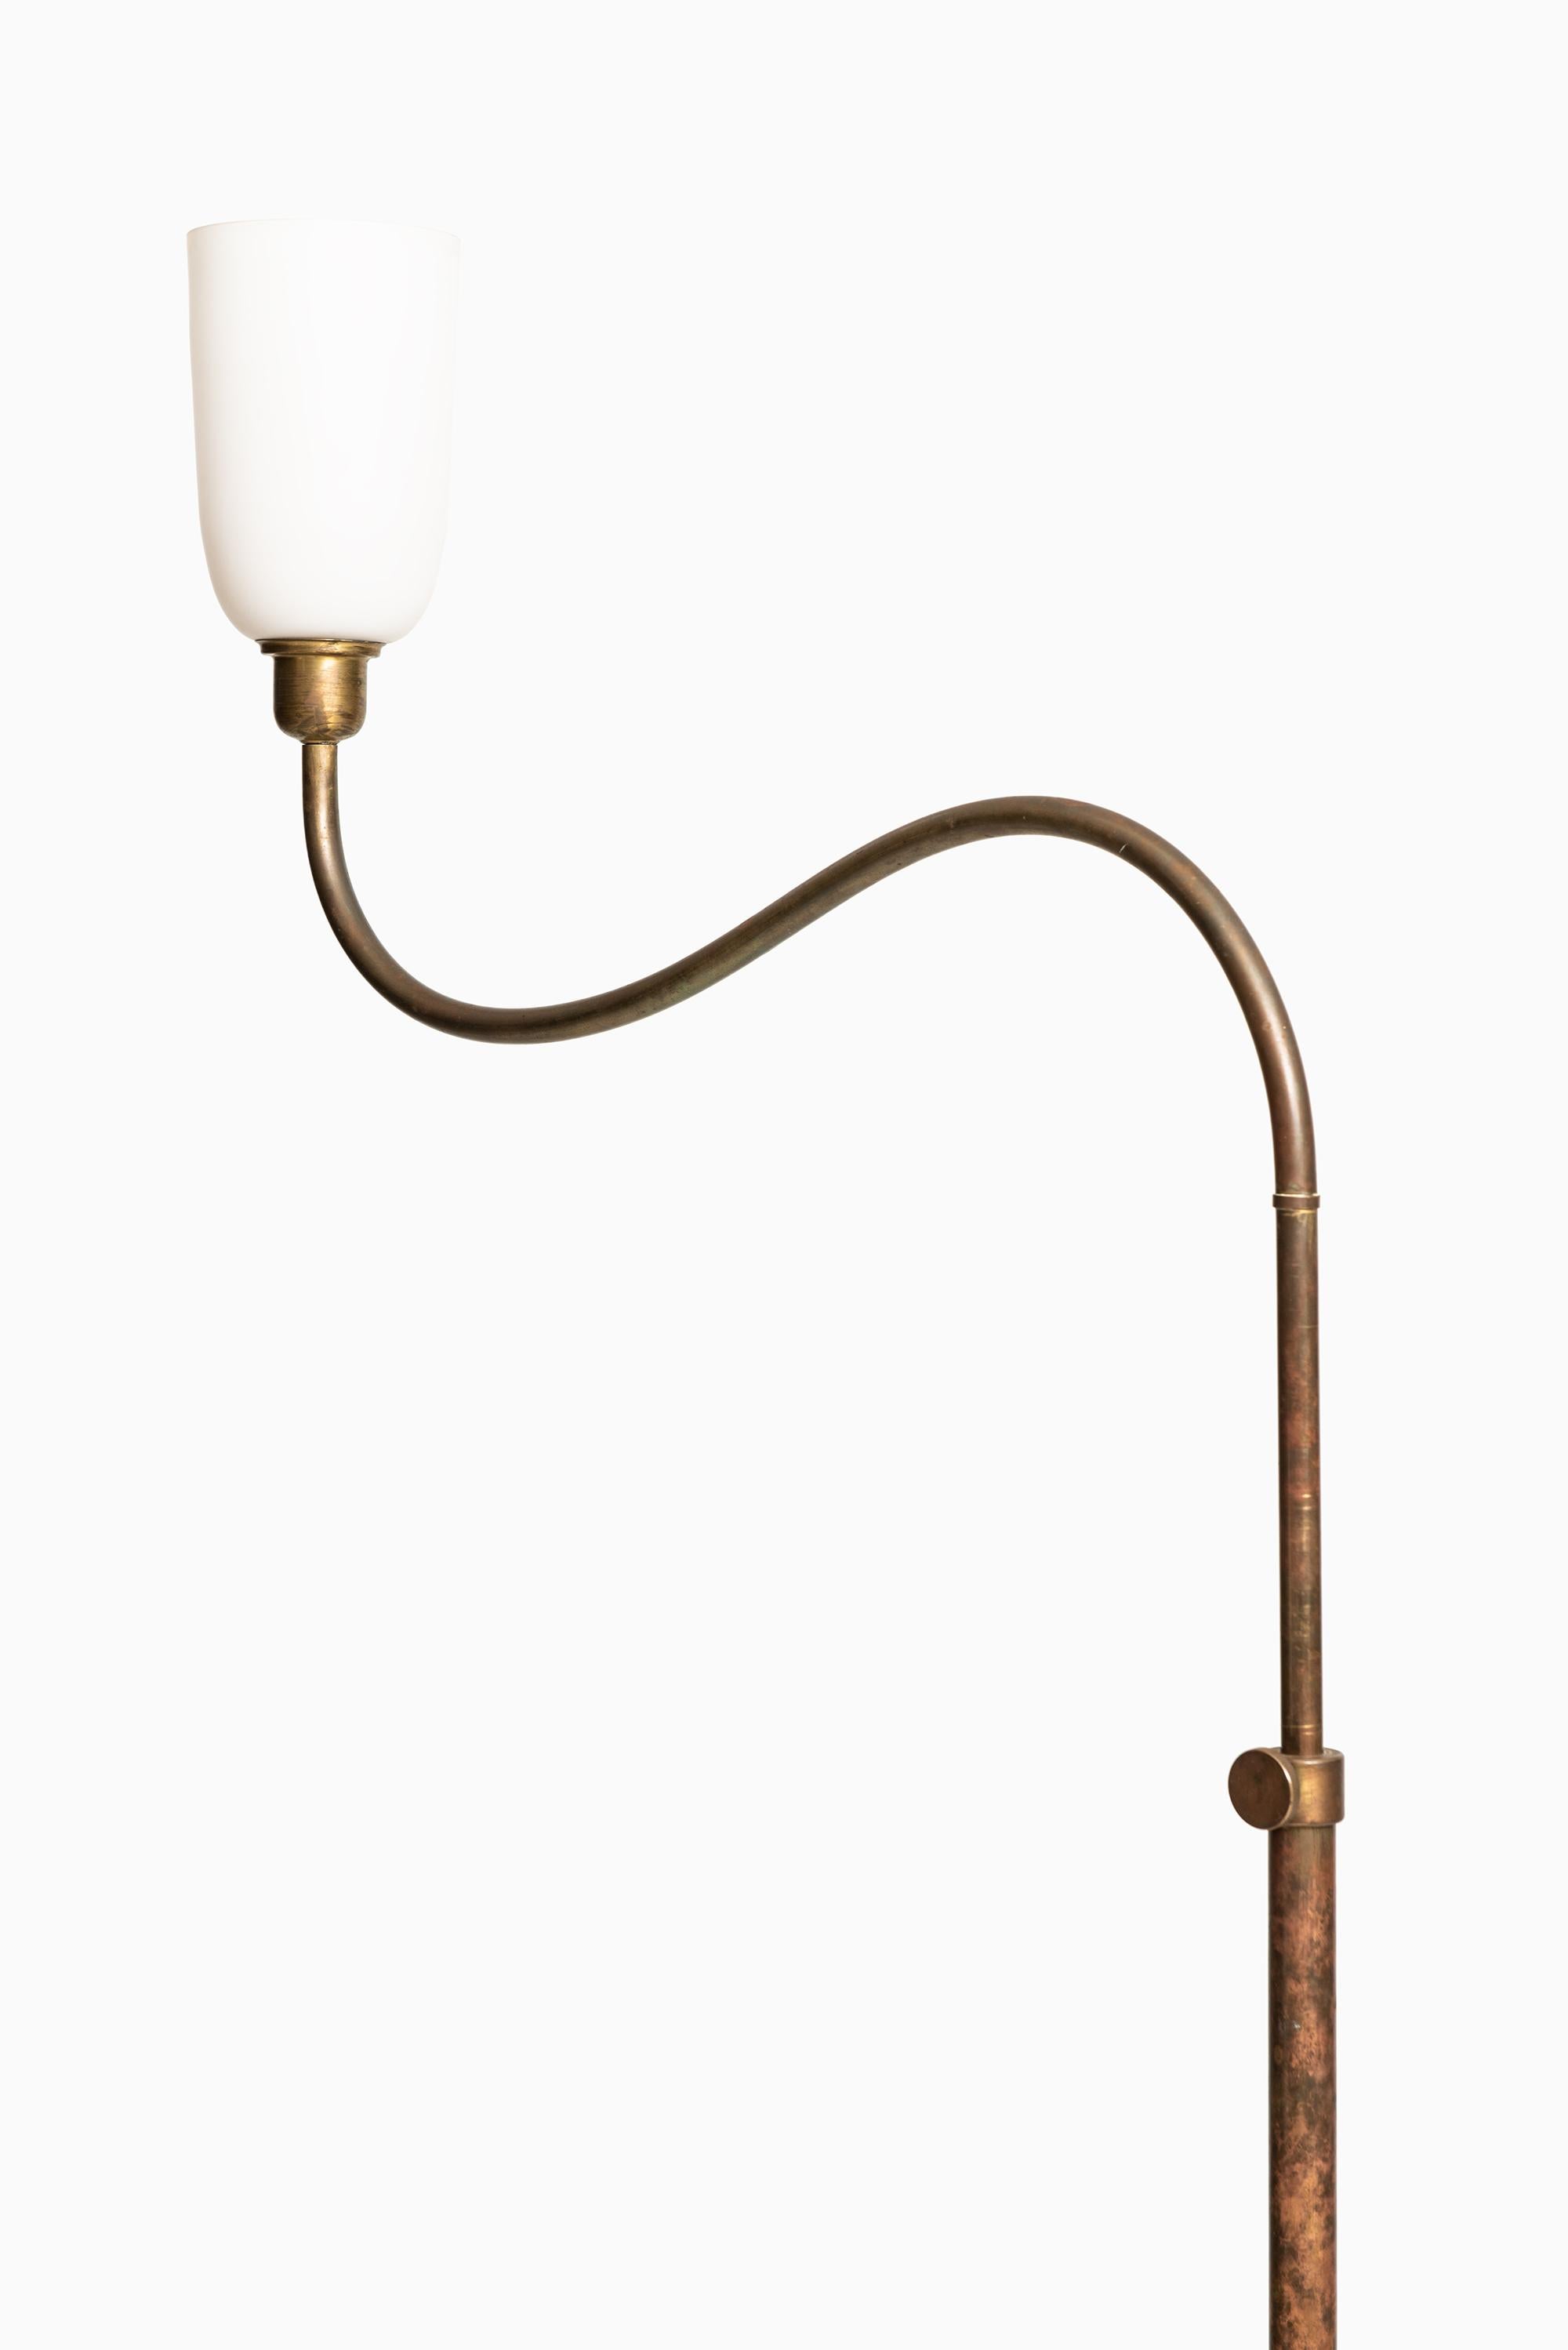 Josef Frank Early Floor Lamp Produced by Svenskt Tenn in Sweden 1